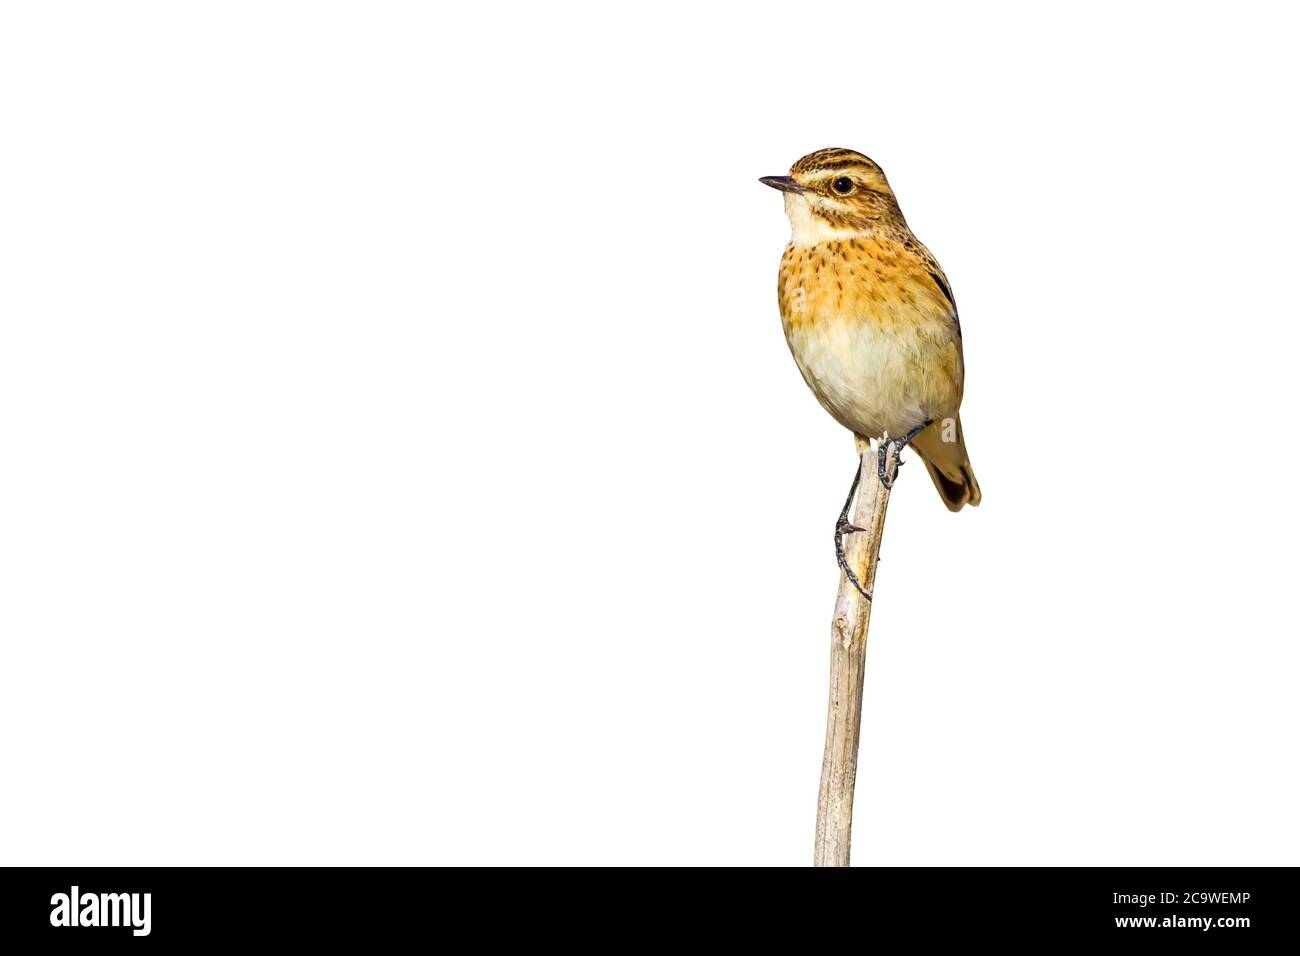 Cute little bird. Isolated bird photo. White background. Stock Photo